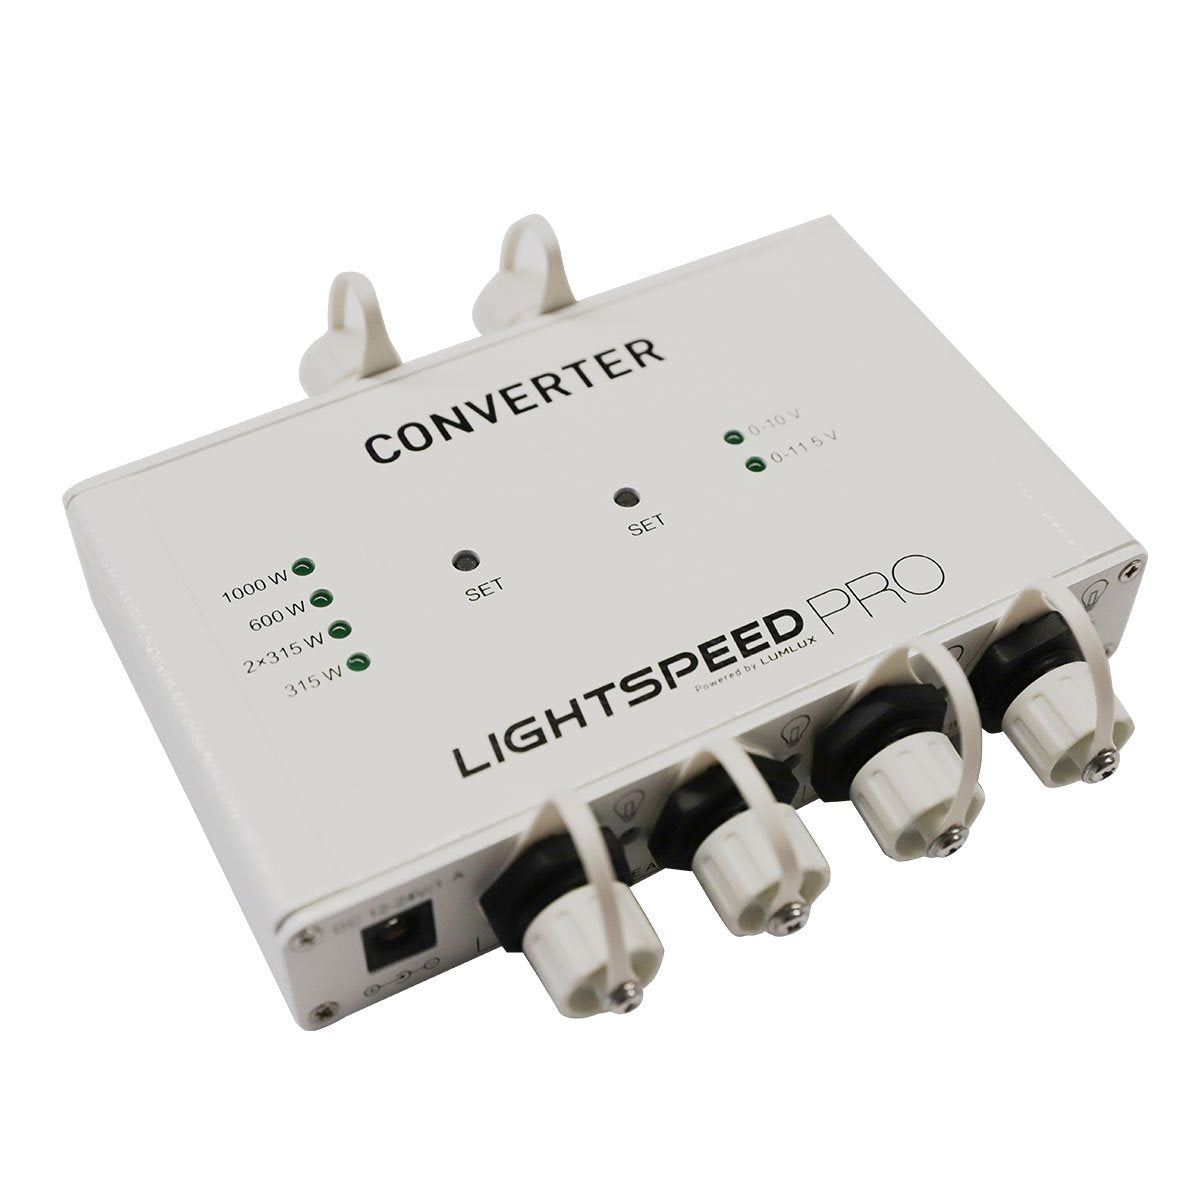 Product Image:Convertisseur de signaux Lightspeed Pro